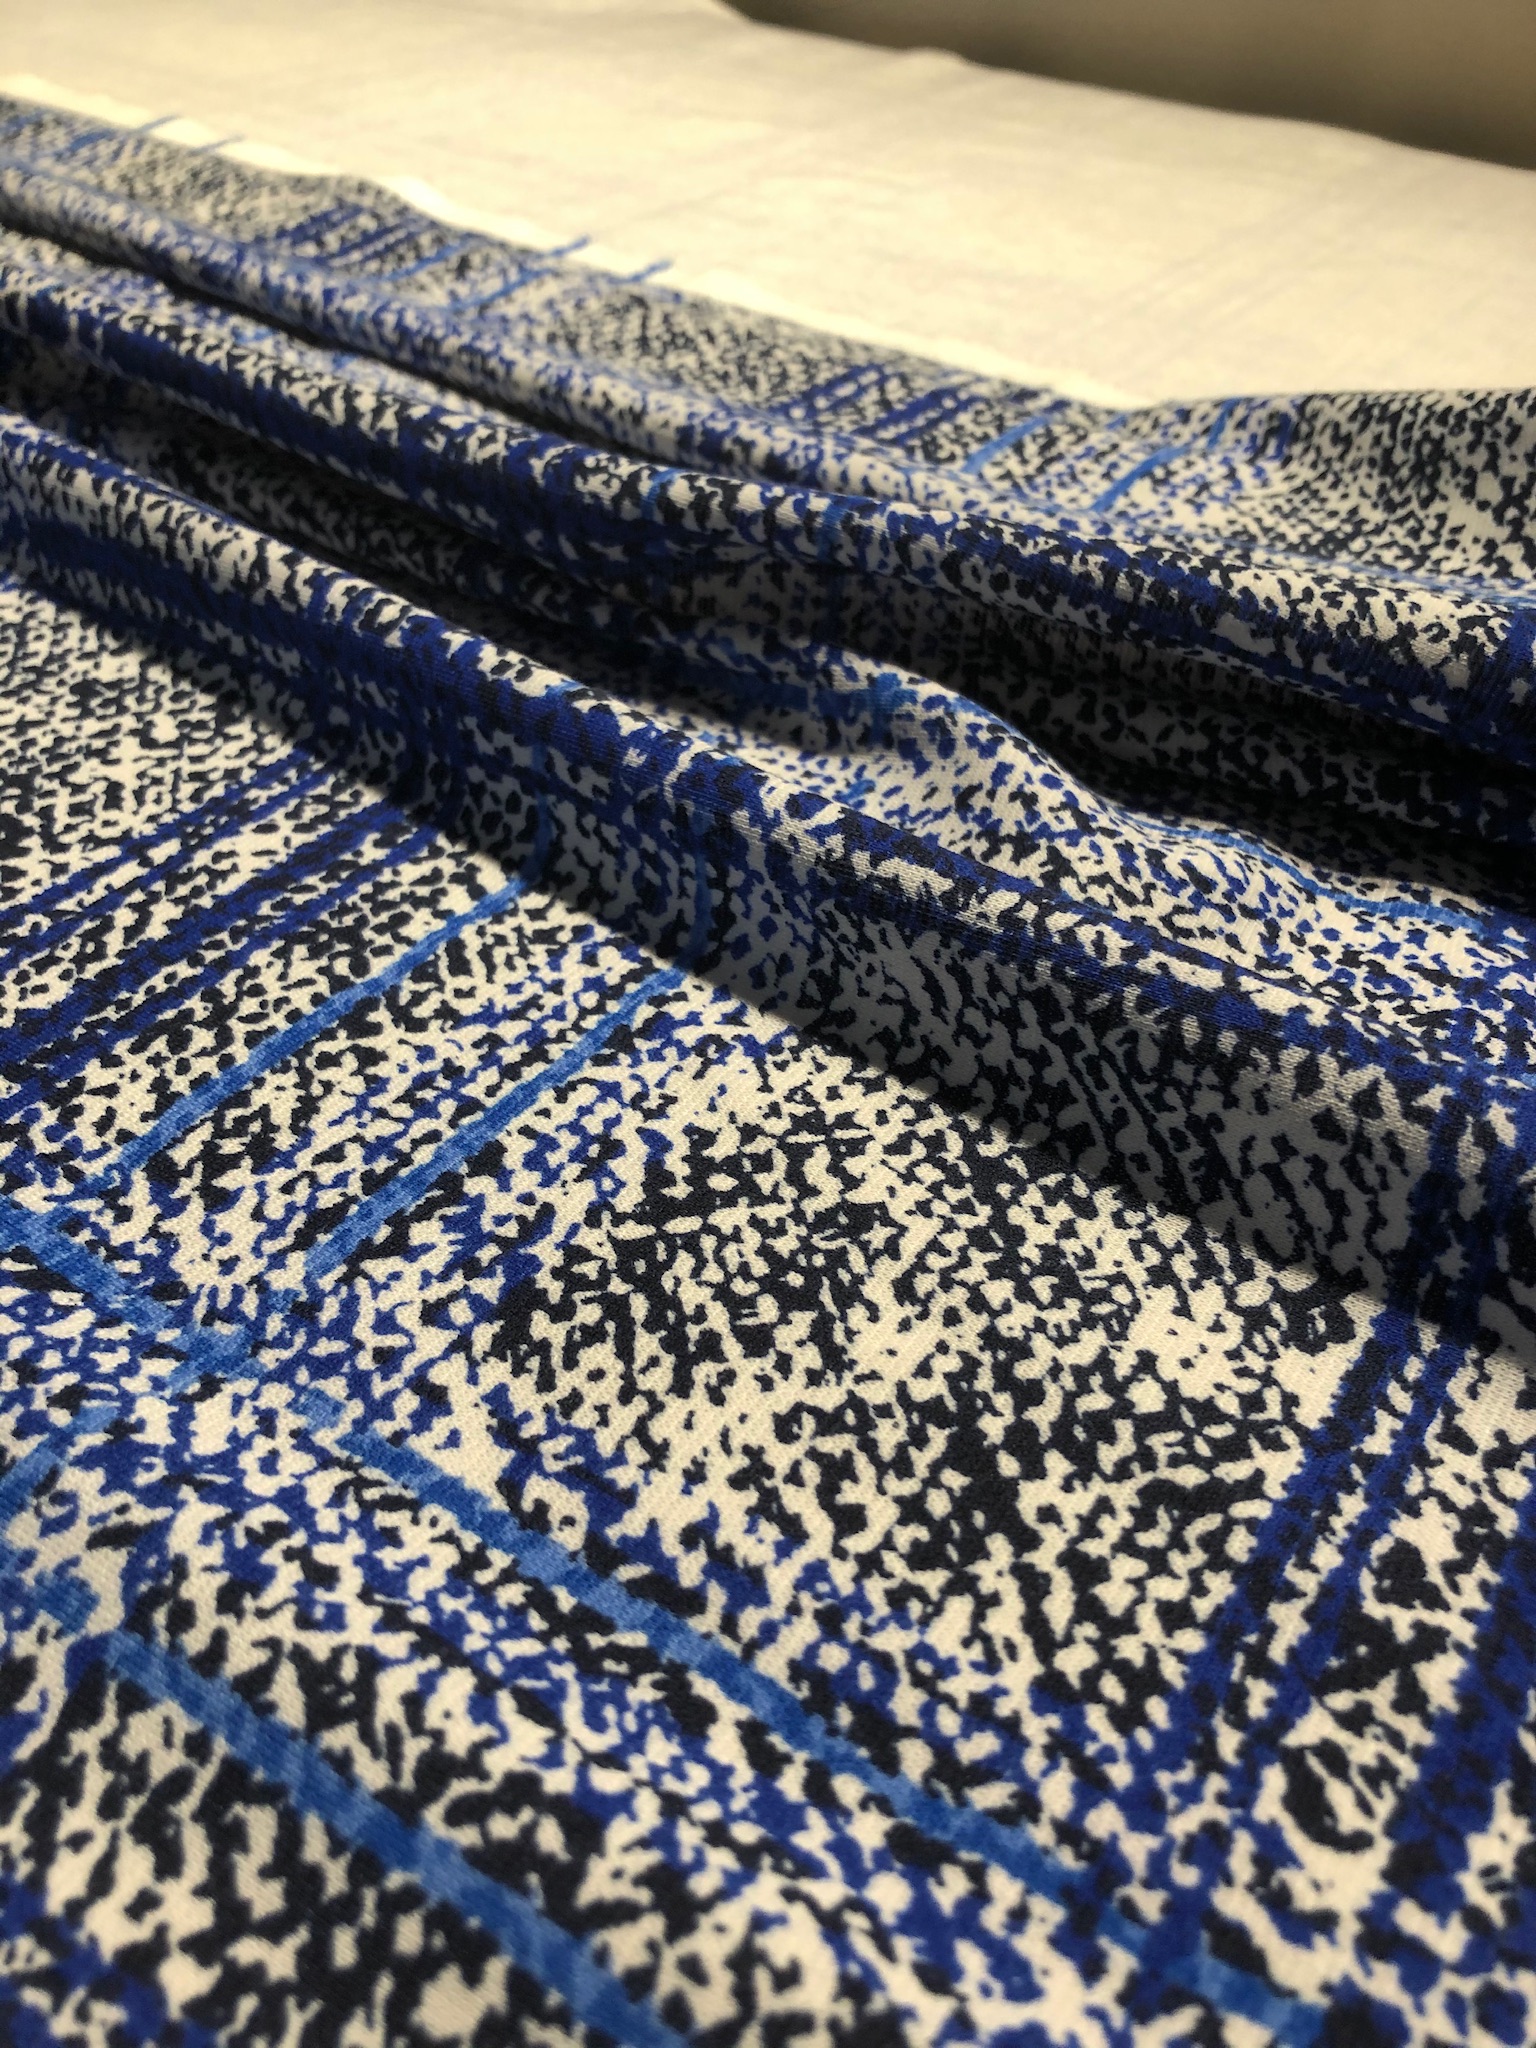 Snapshot of the blue and off-shite plaid ponte fabric